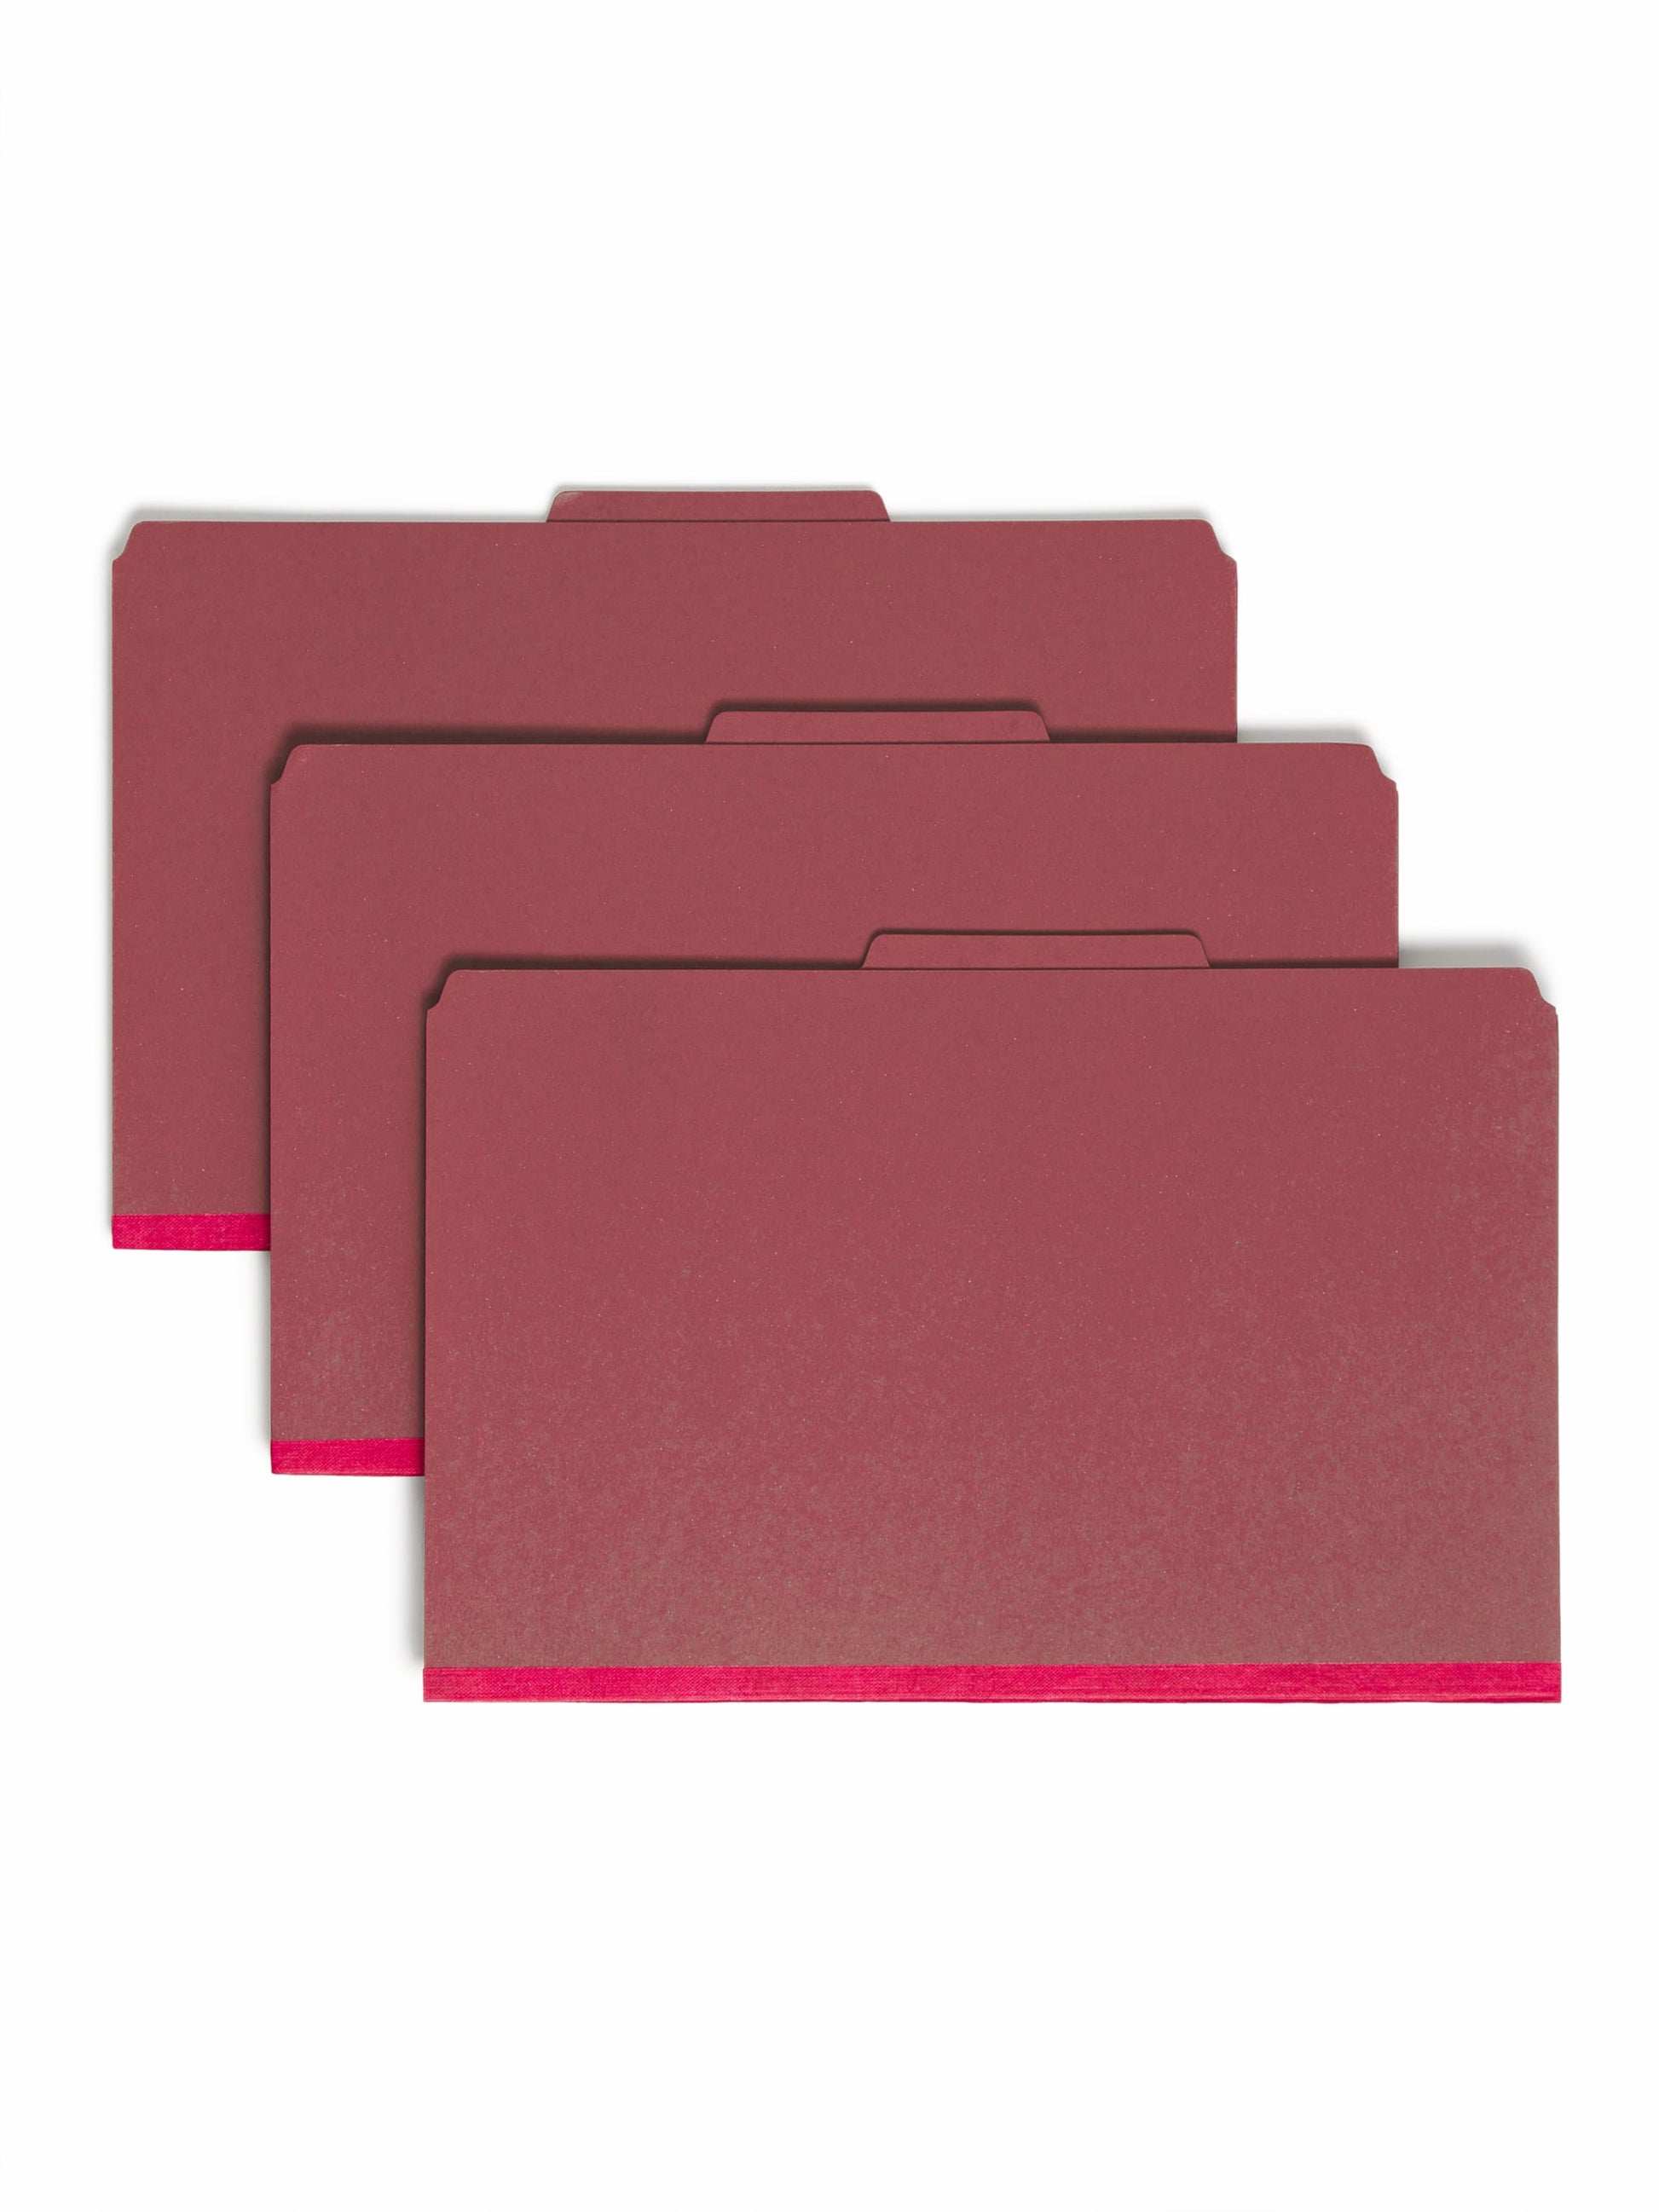 SafeSHIELD® Pressboard Classification File Folders, 1 Divider, 2 inch Expansion, Bright Red Color, Legal Size, Set of 0, 30086486187313